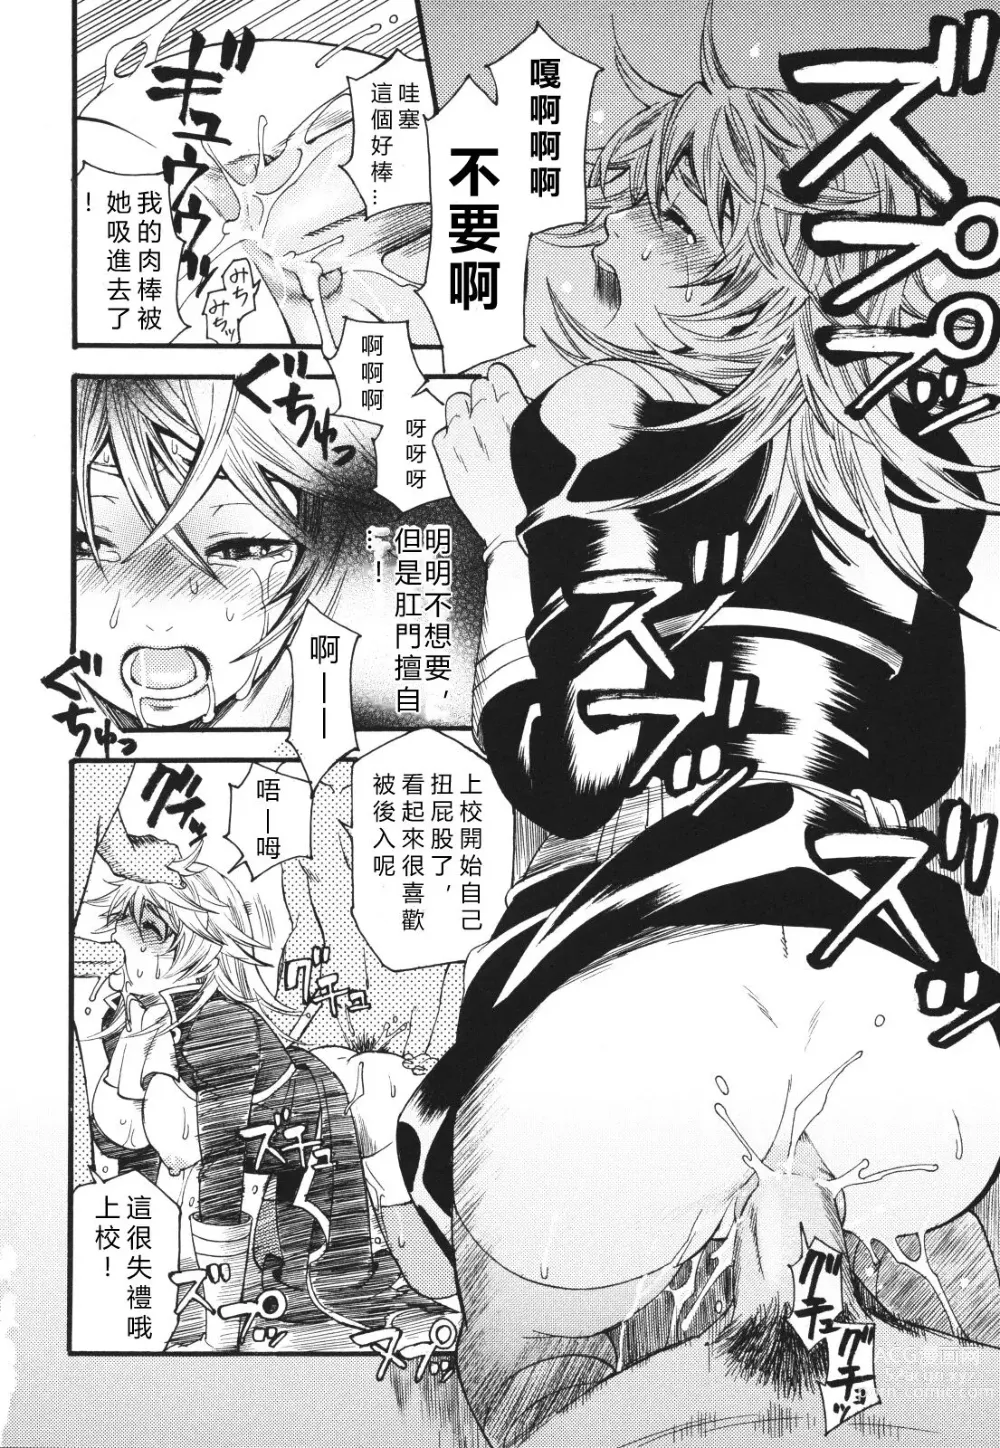 Page 12 of manga Yokubou Junkie